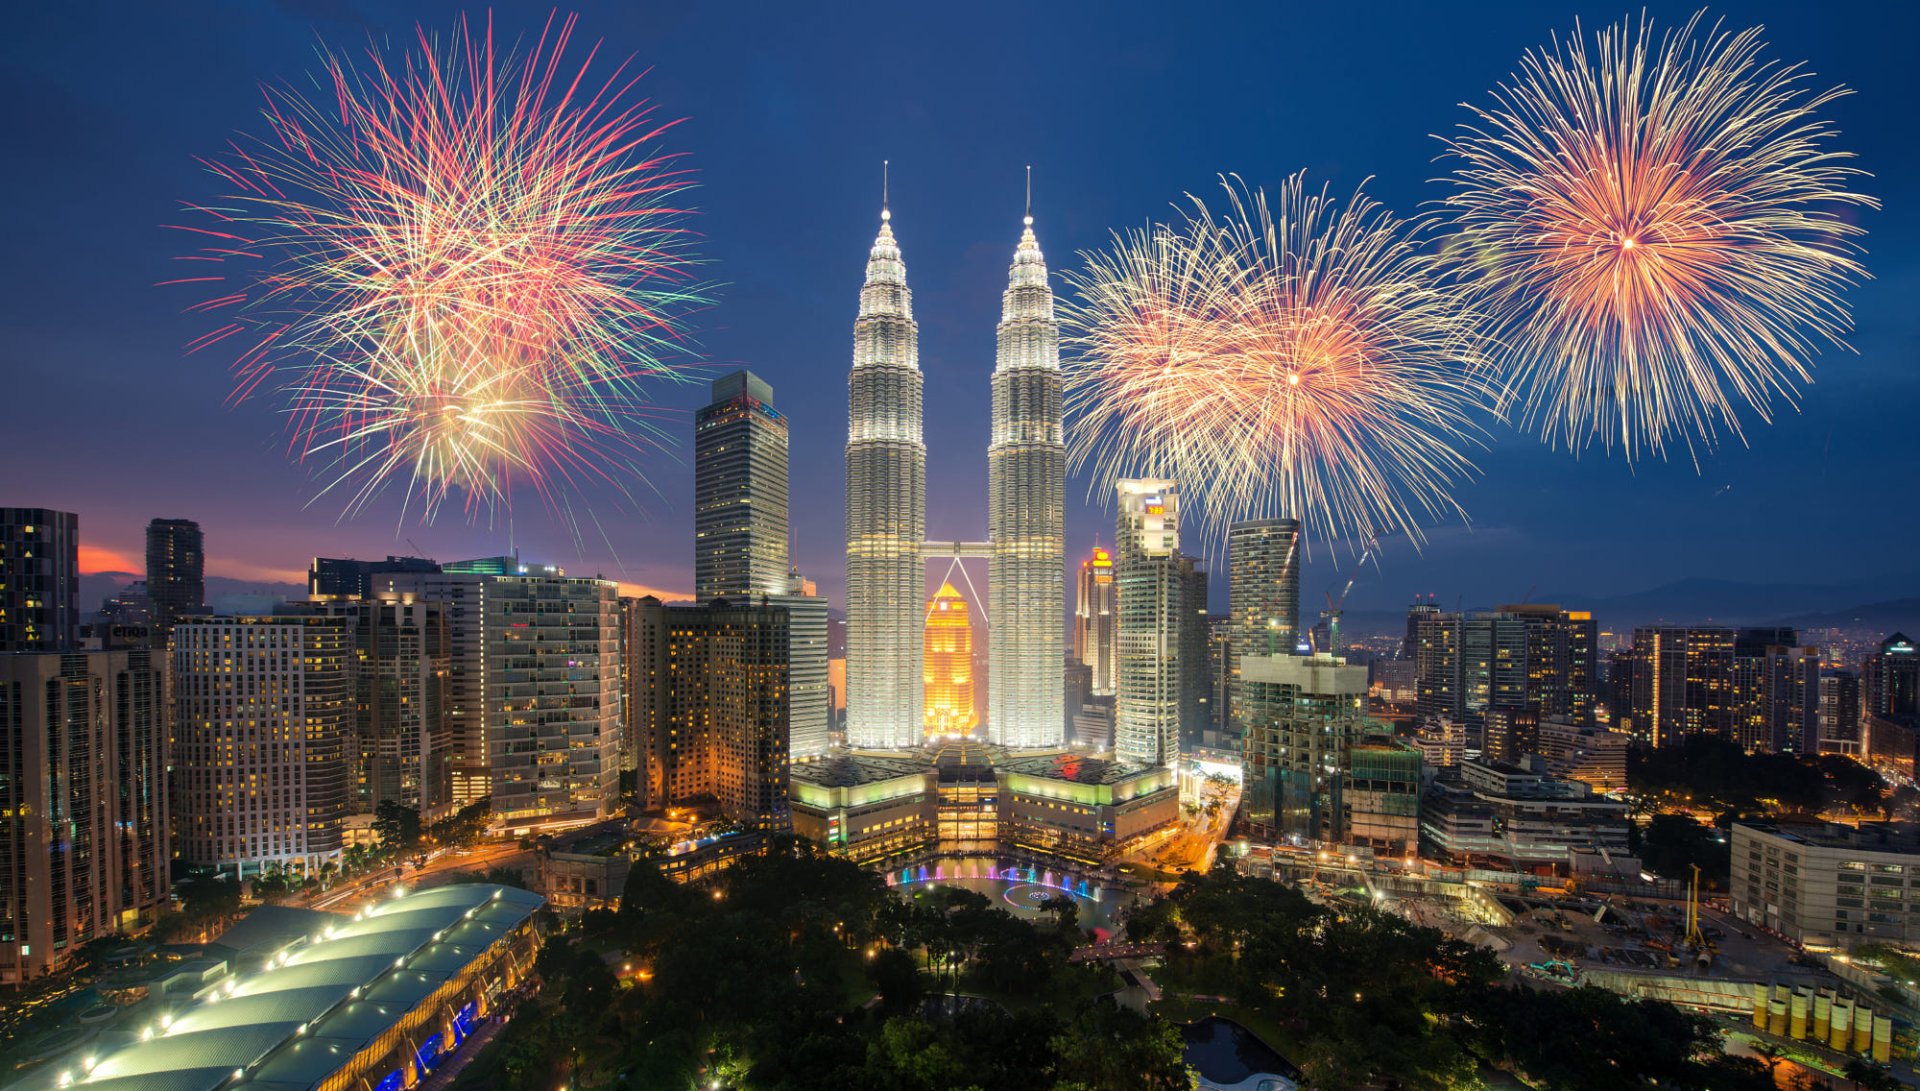 Fireworks over Malaysia by Prasit Rodphan